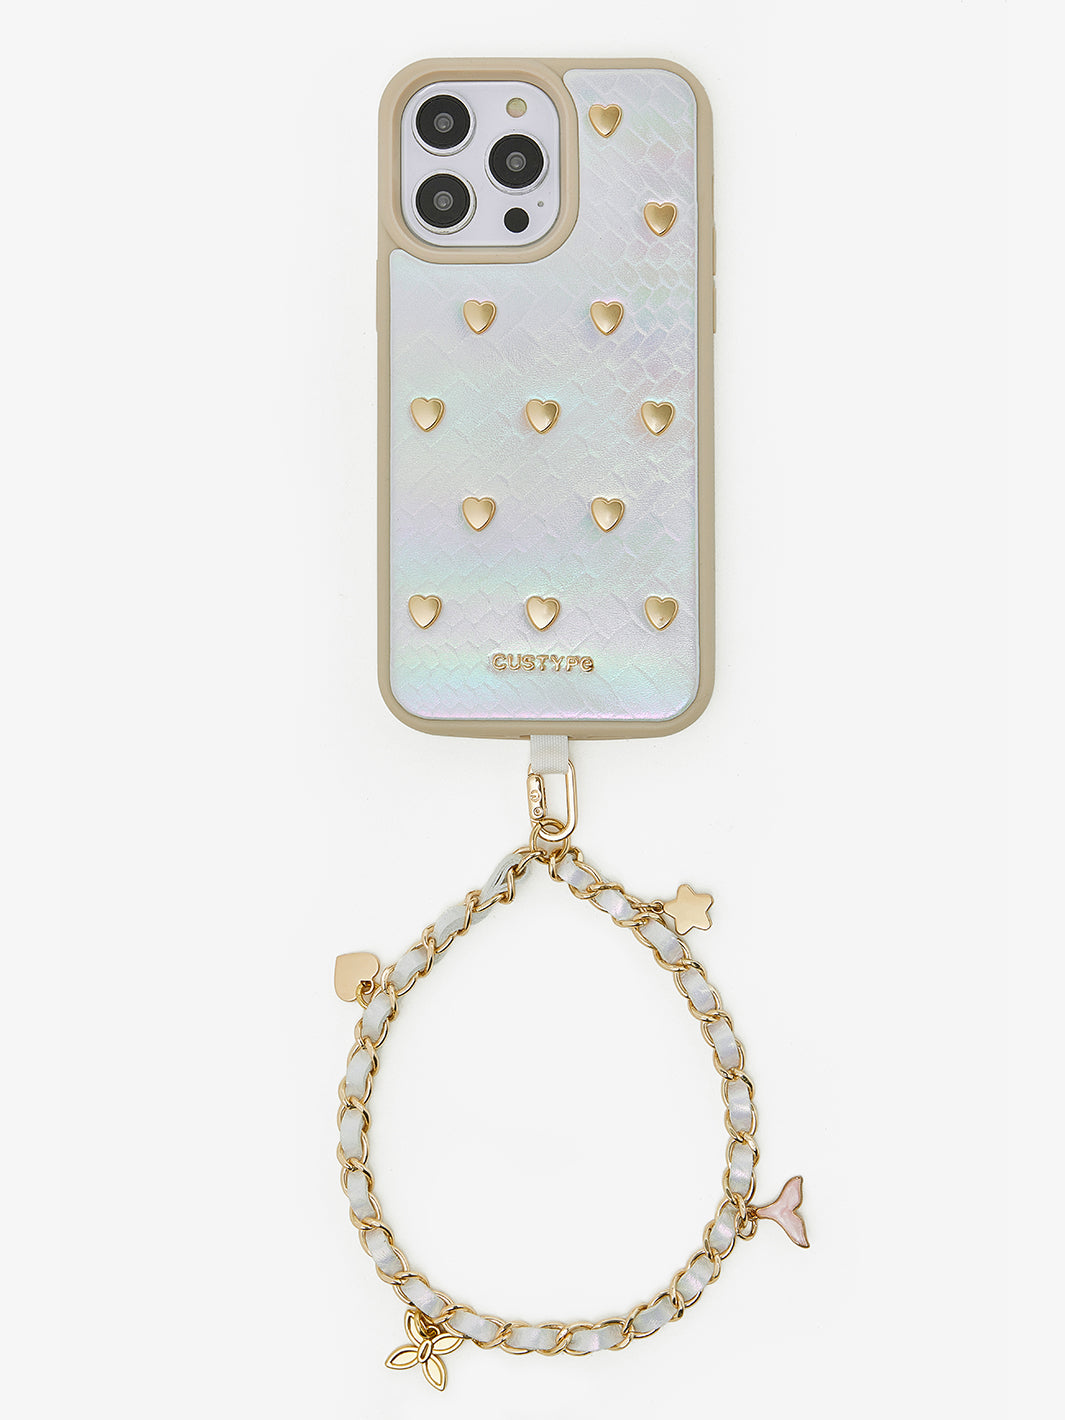 Custype phone case chain wrist strap 14 